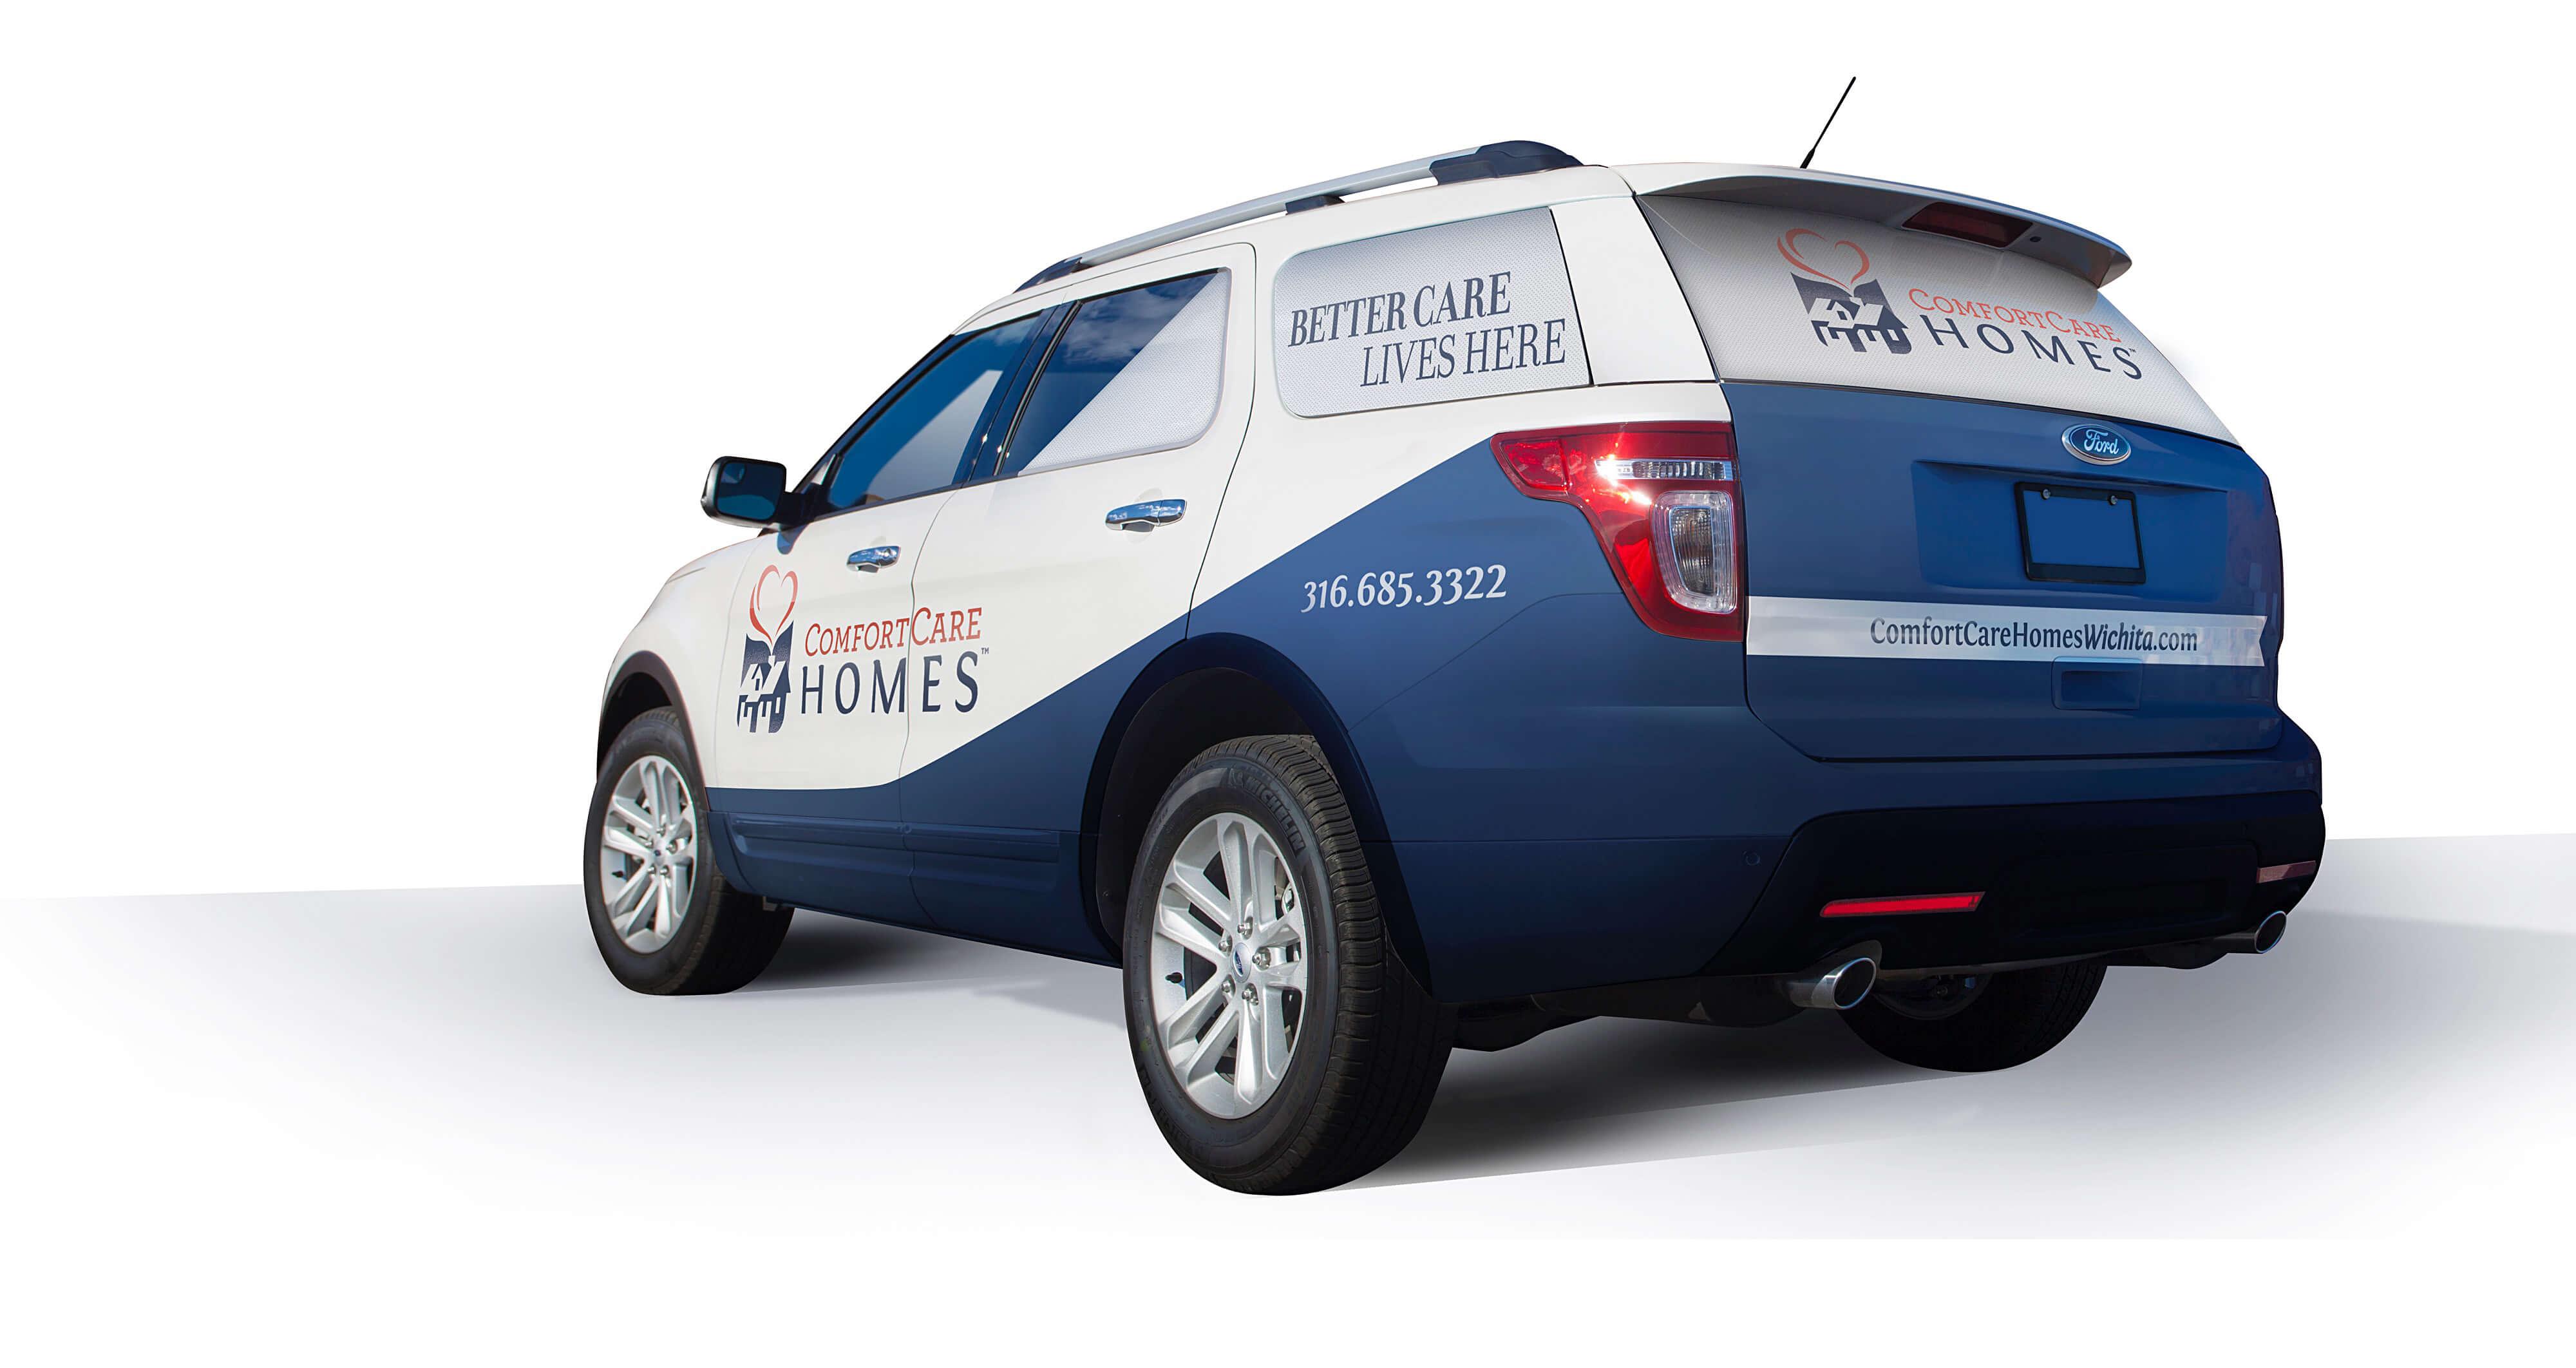 ComfortCare Homes branded vehicle image